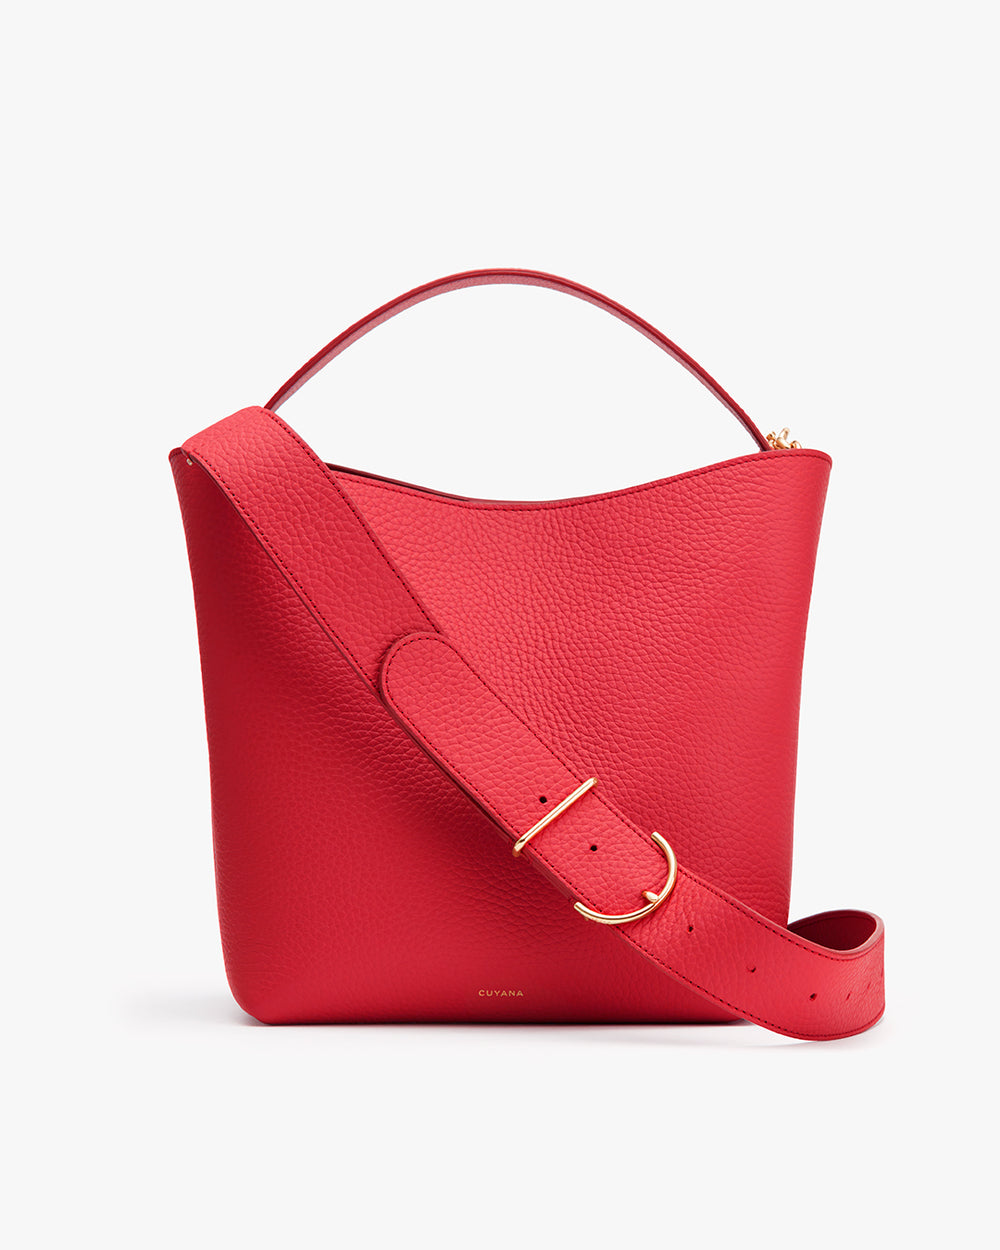 Handbag with a top handle and a detachable shoulder strap.